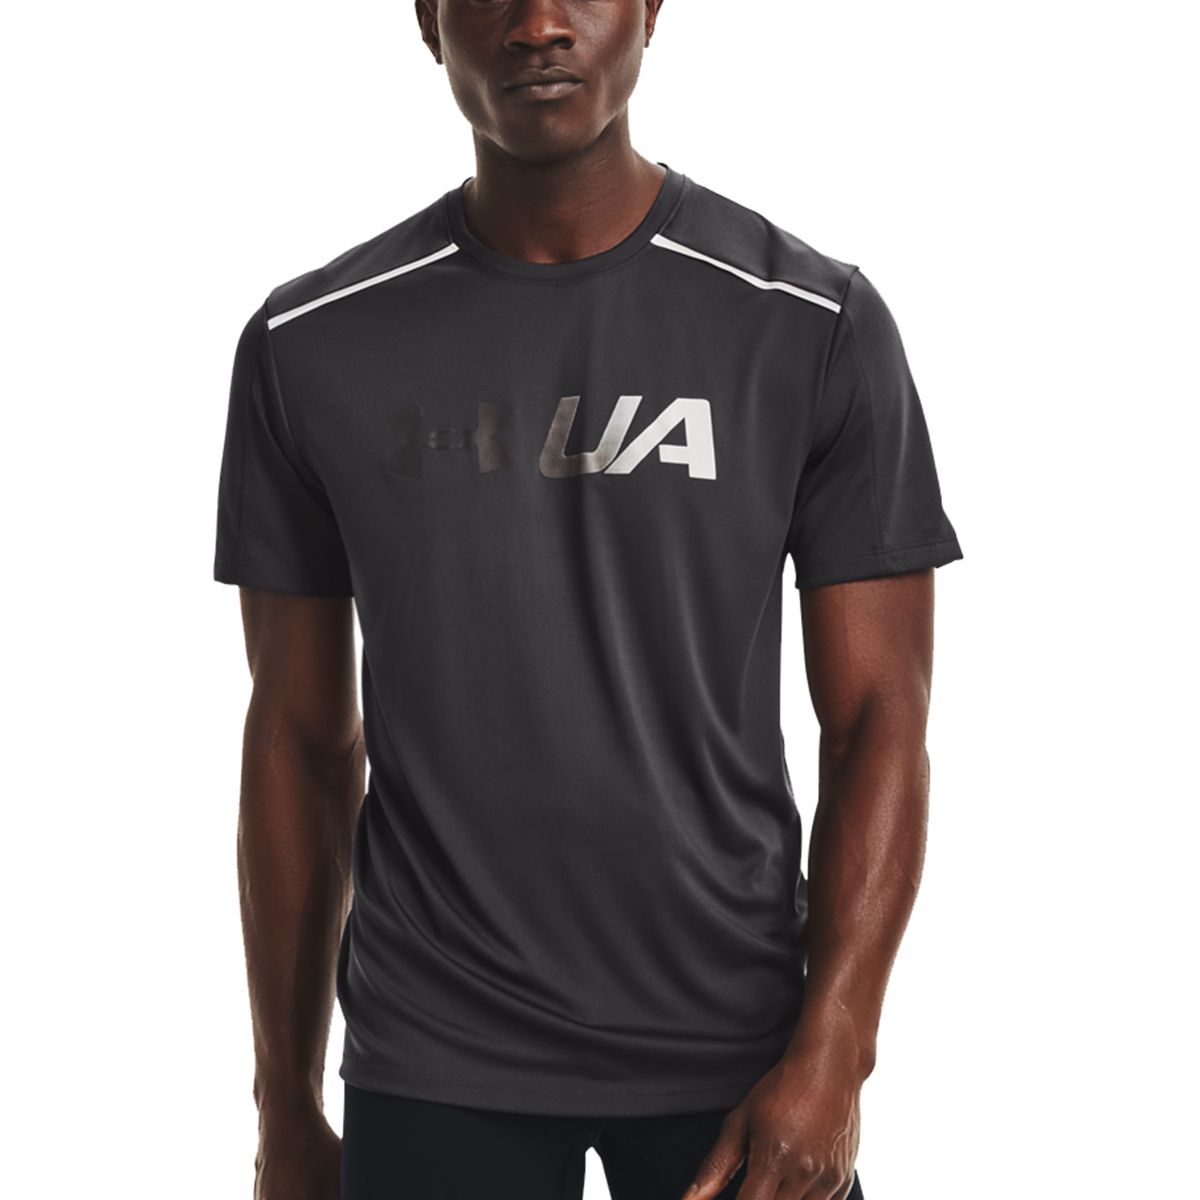 Lucky Brand Men's Short Sleeve Graphic T-Shirt, Jet Black, Medium